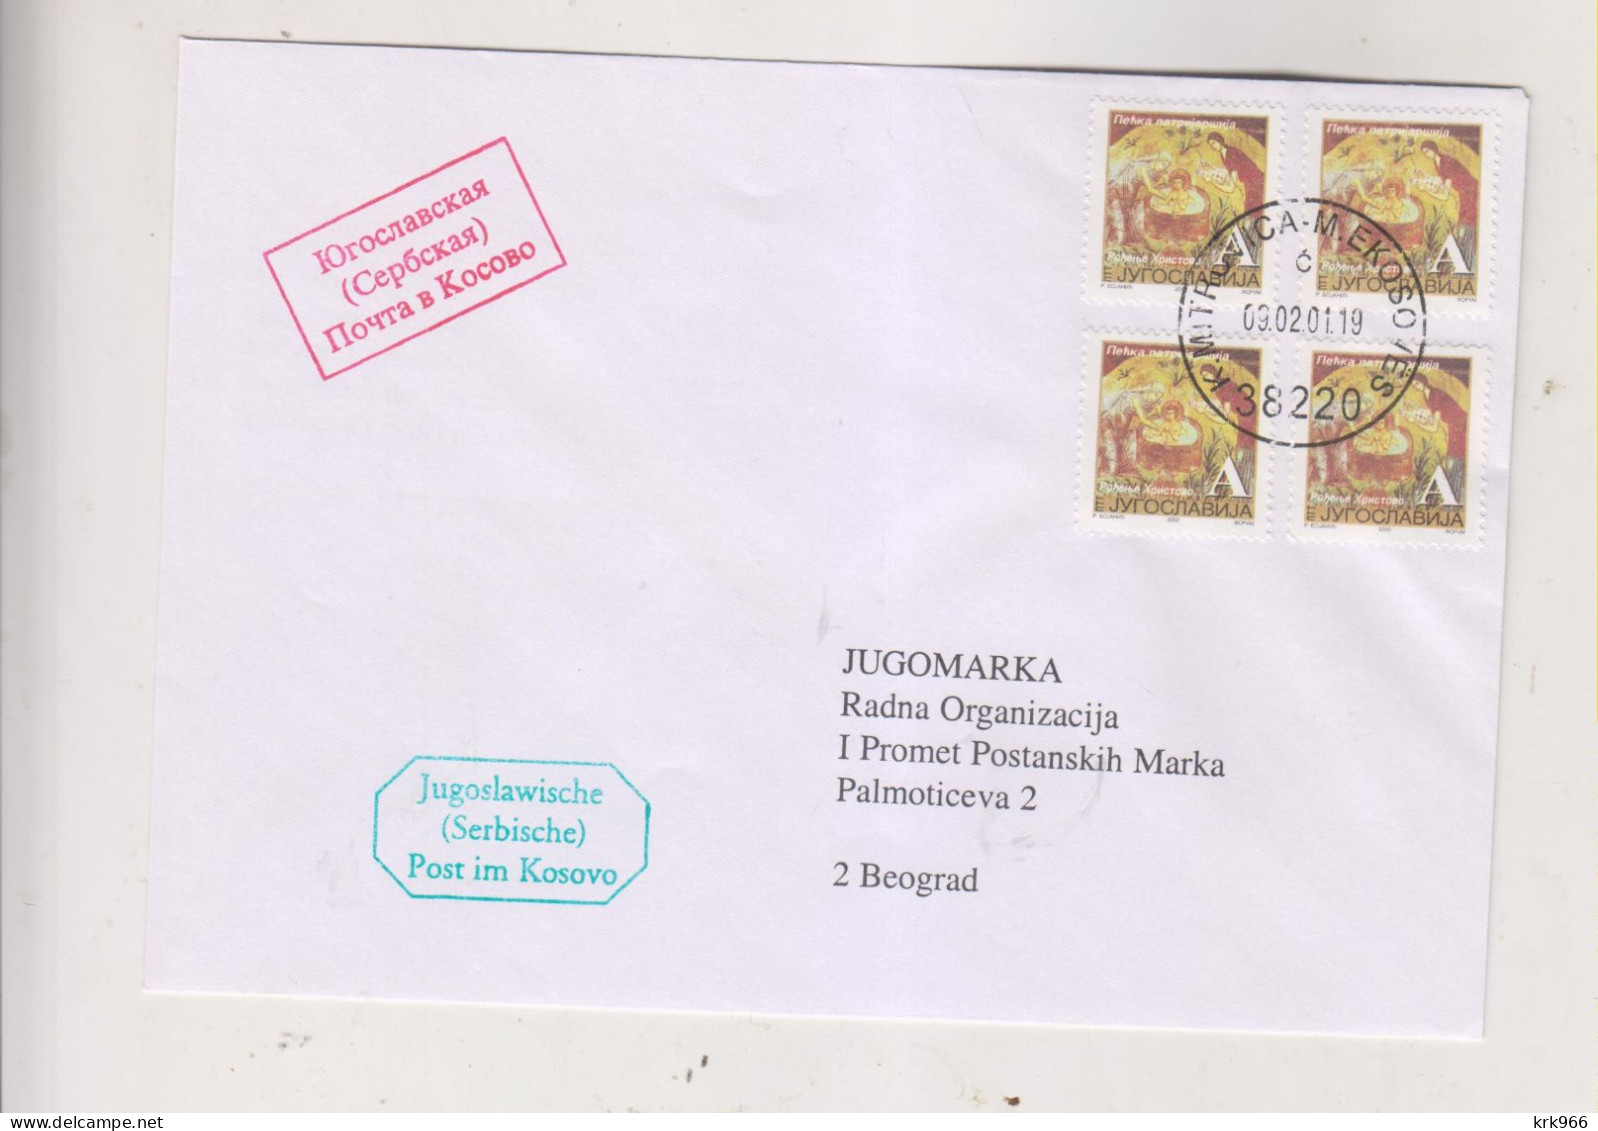 YUGOSLAVIA,2001 KOSOVO KOSOVSKA MITROVICA SERBIAN POST Nice Cover - Briefe U. Dokumente